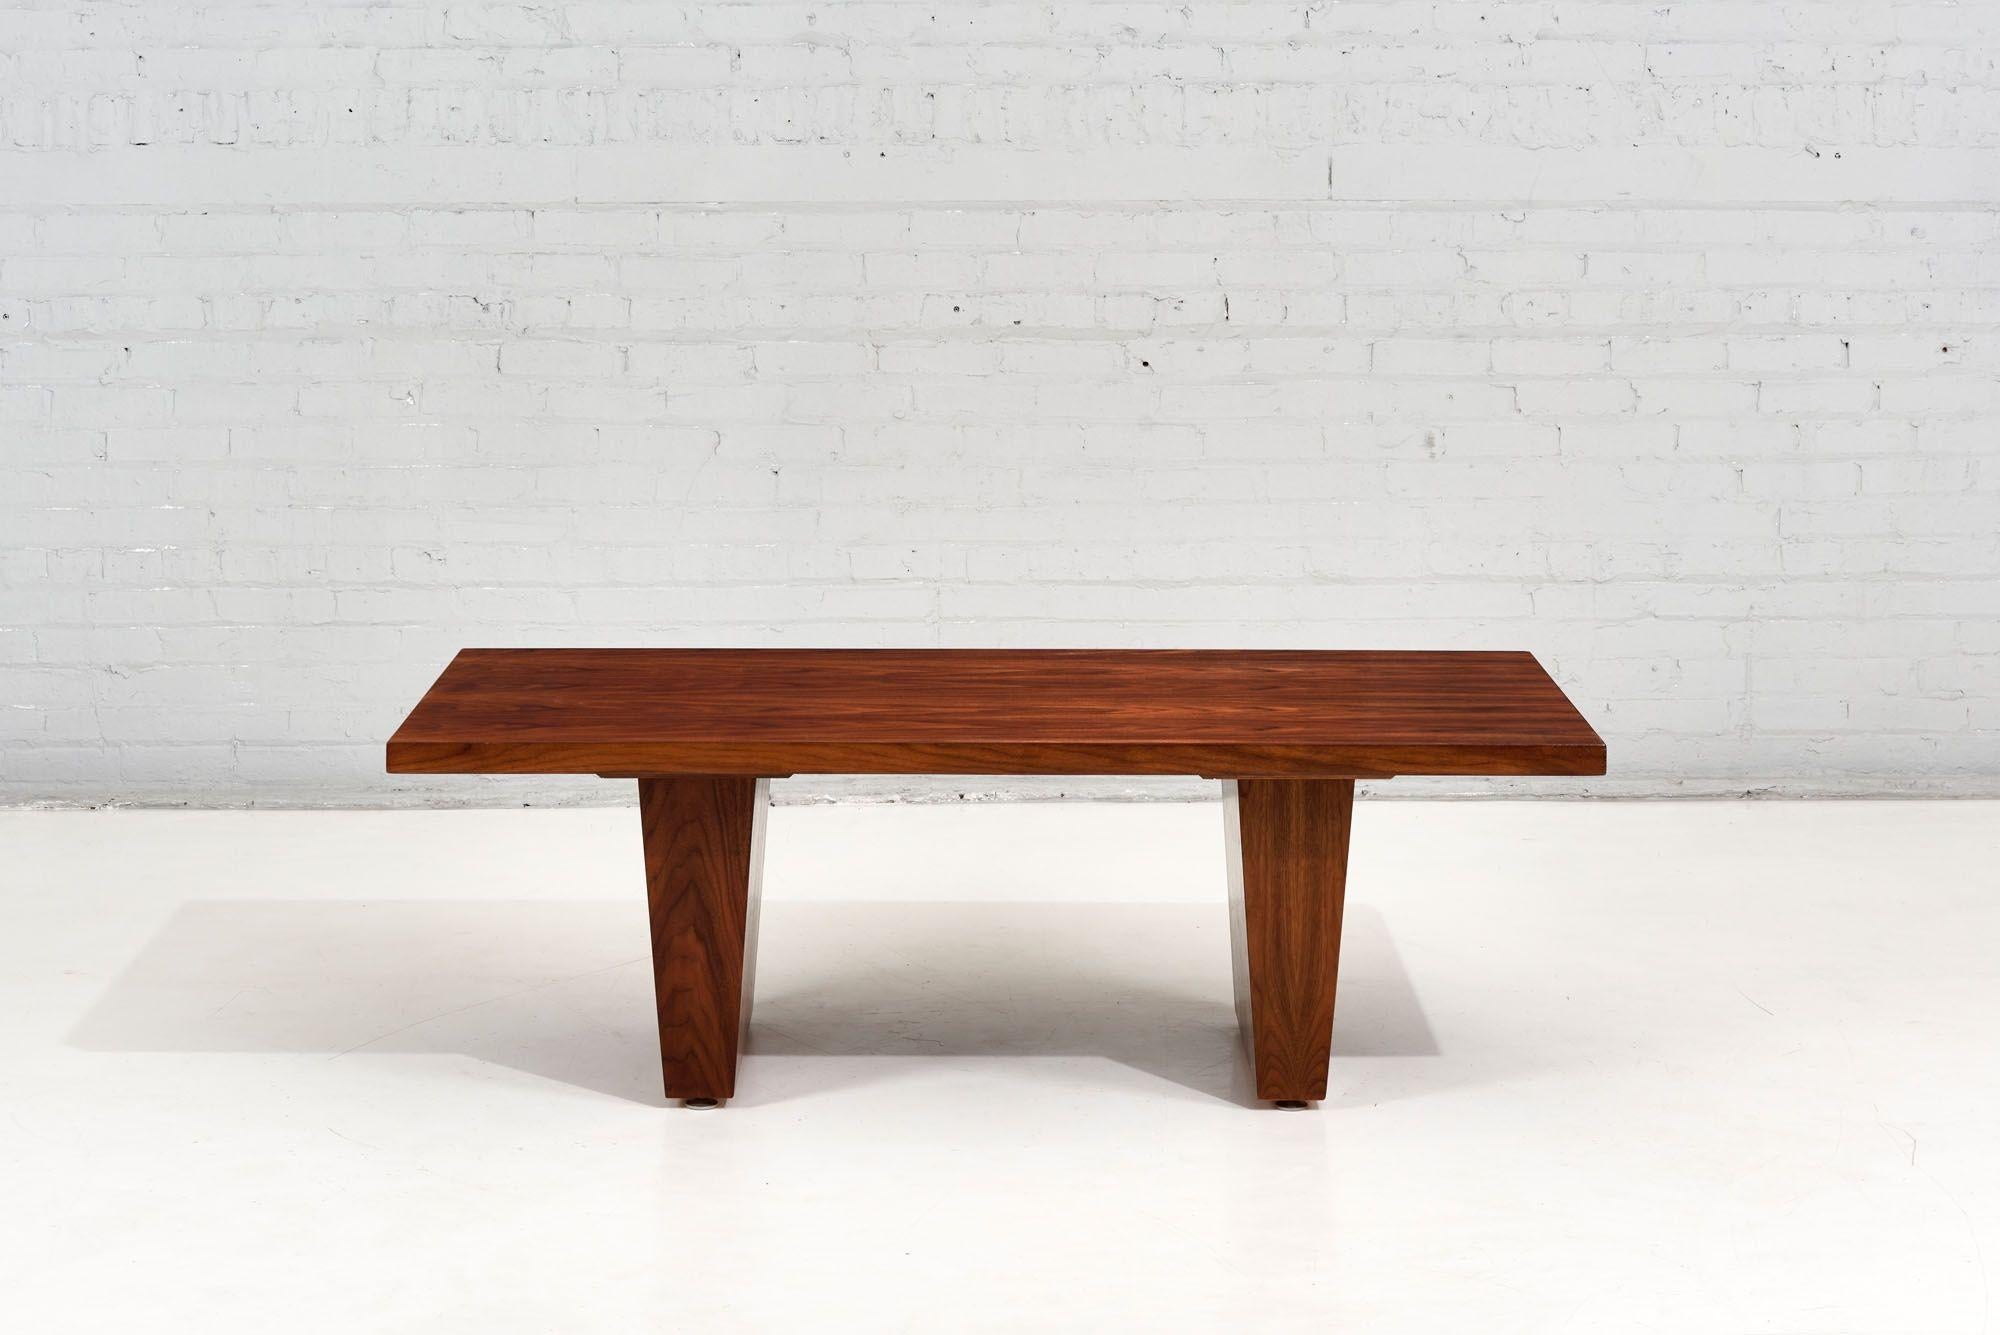 Mid-century American modern walnut coffee table, 1960.
Completely restored.